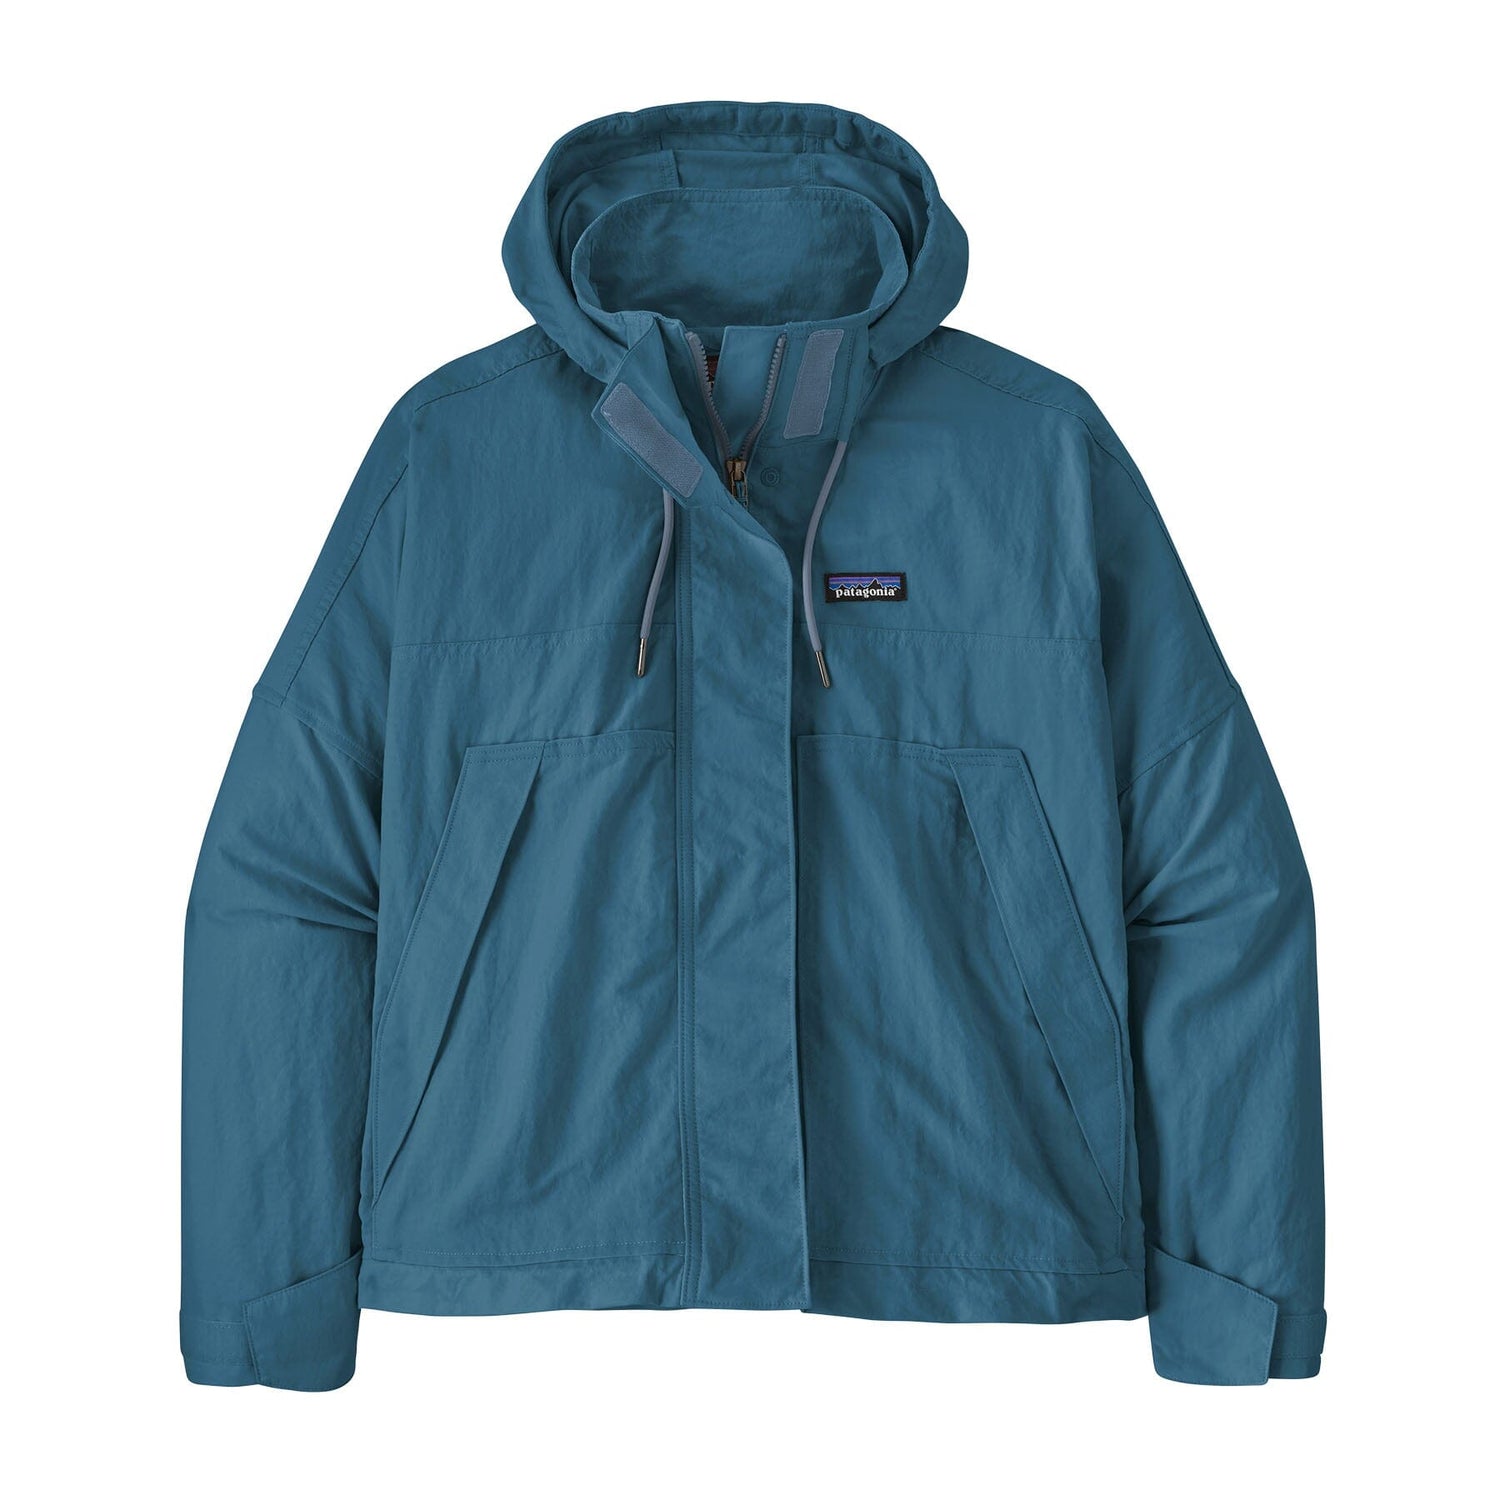 Patagonia - W's Skysail Jacket - Recycled Nylon - Weekendbee - sustainable sportswear